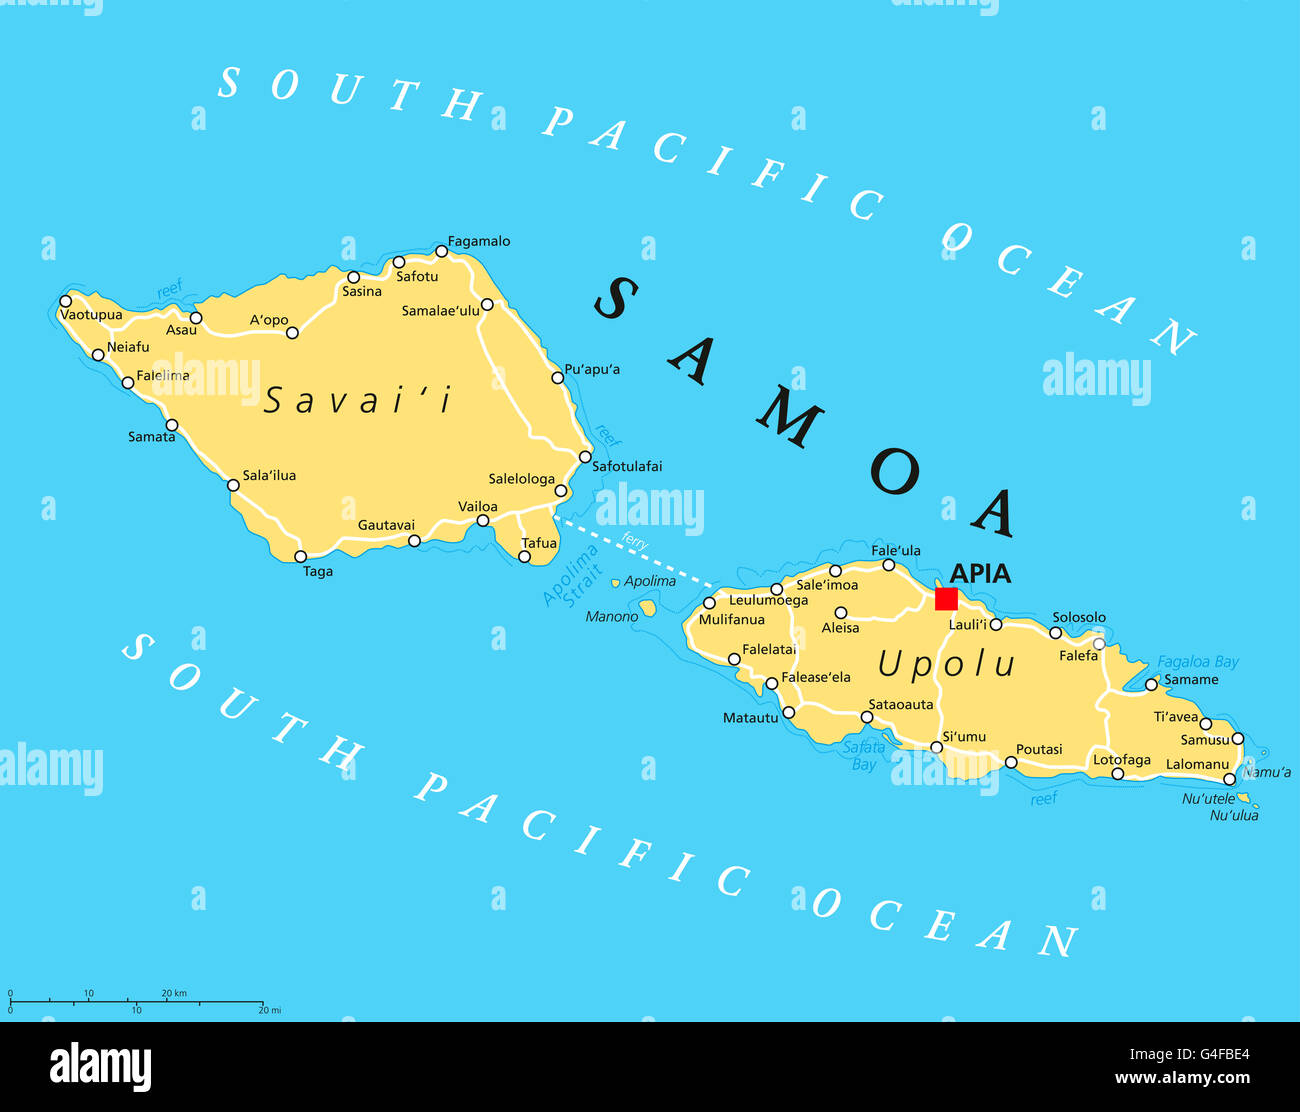 Map Of The Samoan Islands World Map | The Best Porn Website